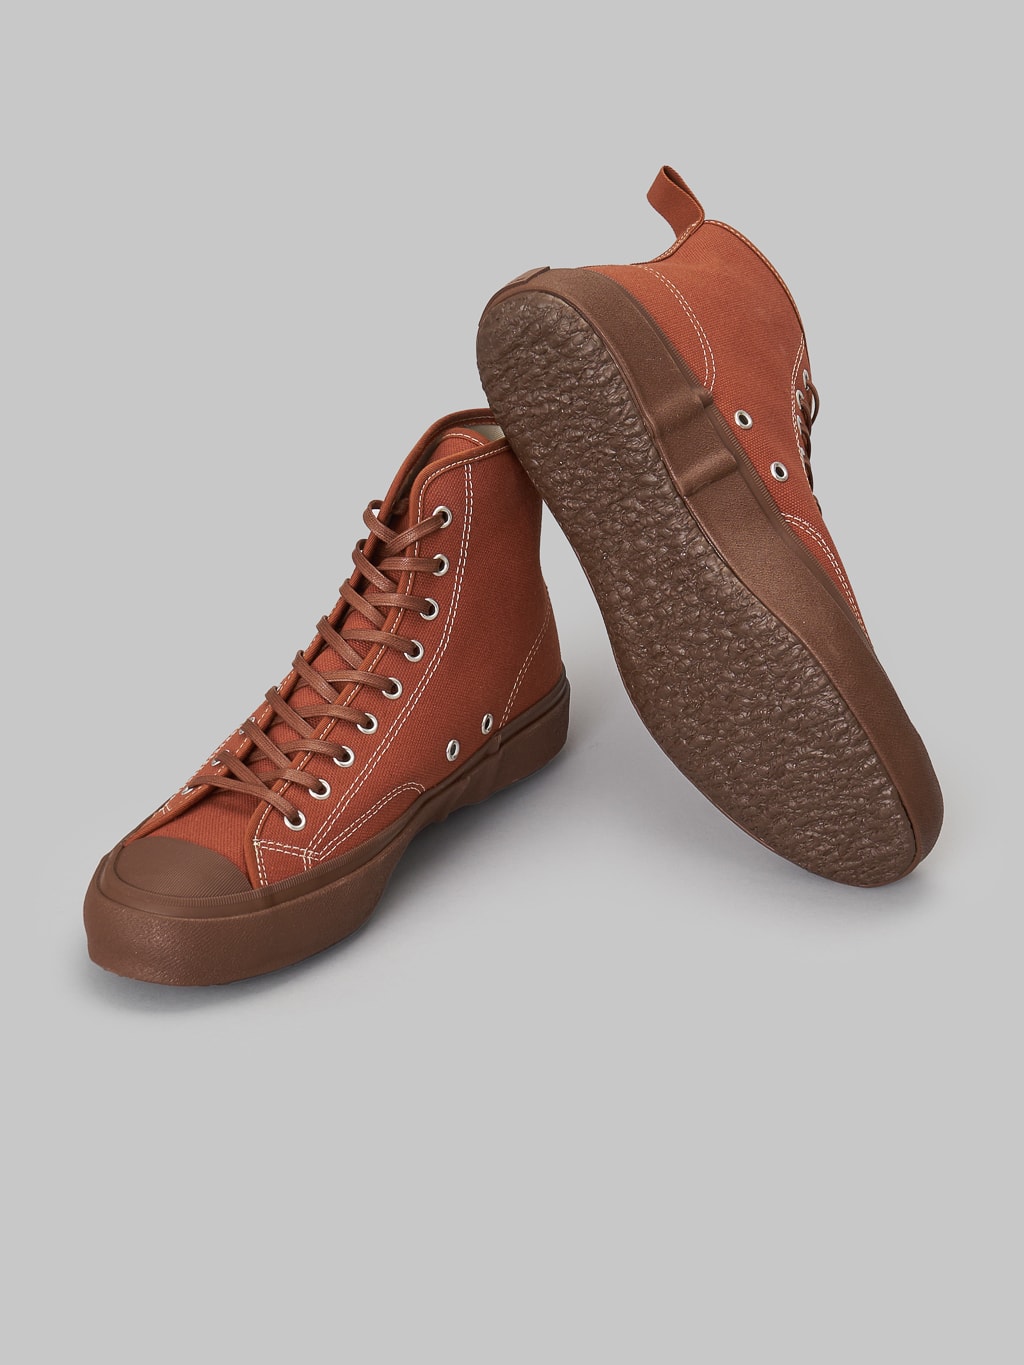 moonstar hi basket fine vulcanized brown sneakers rubber sole